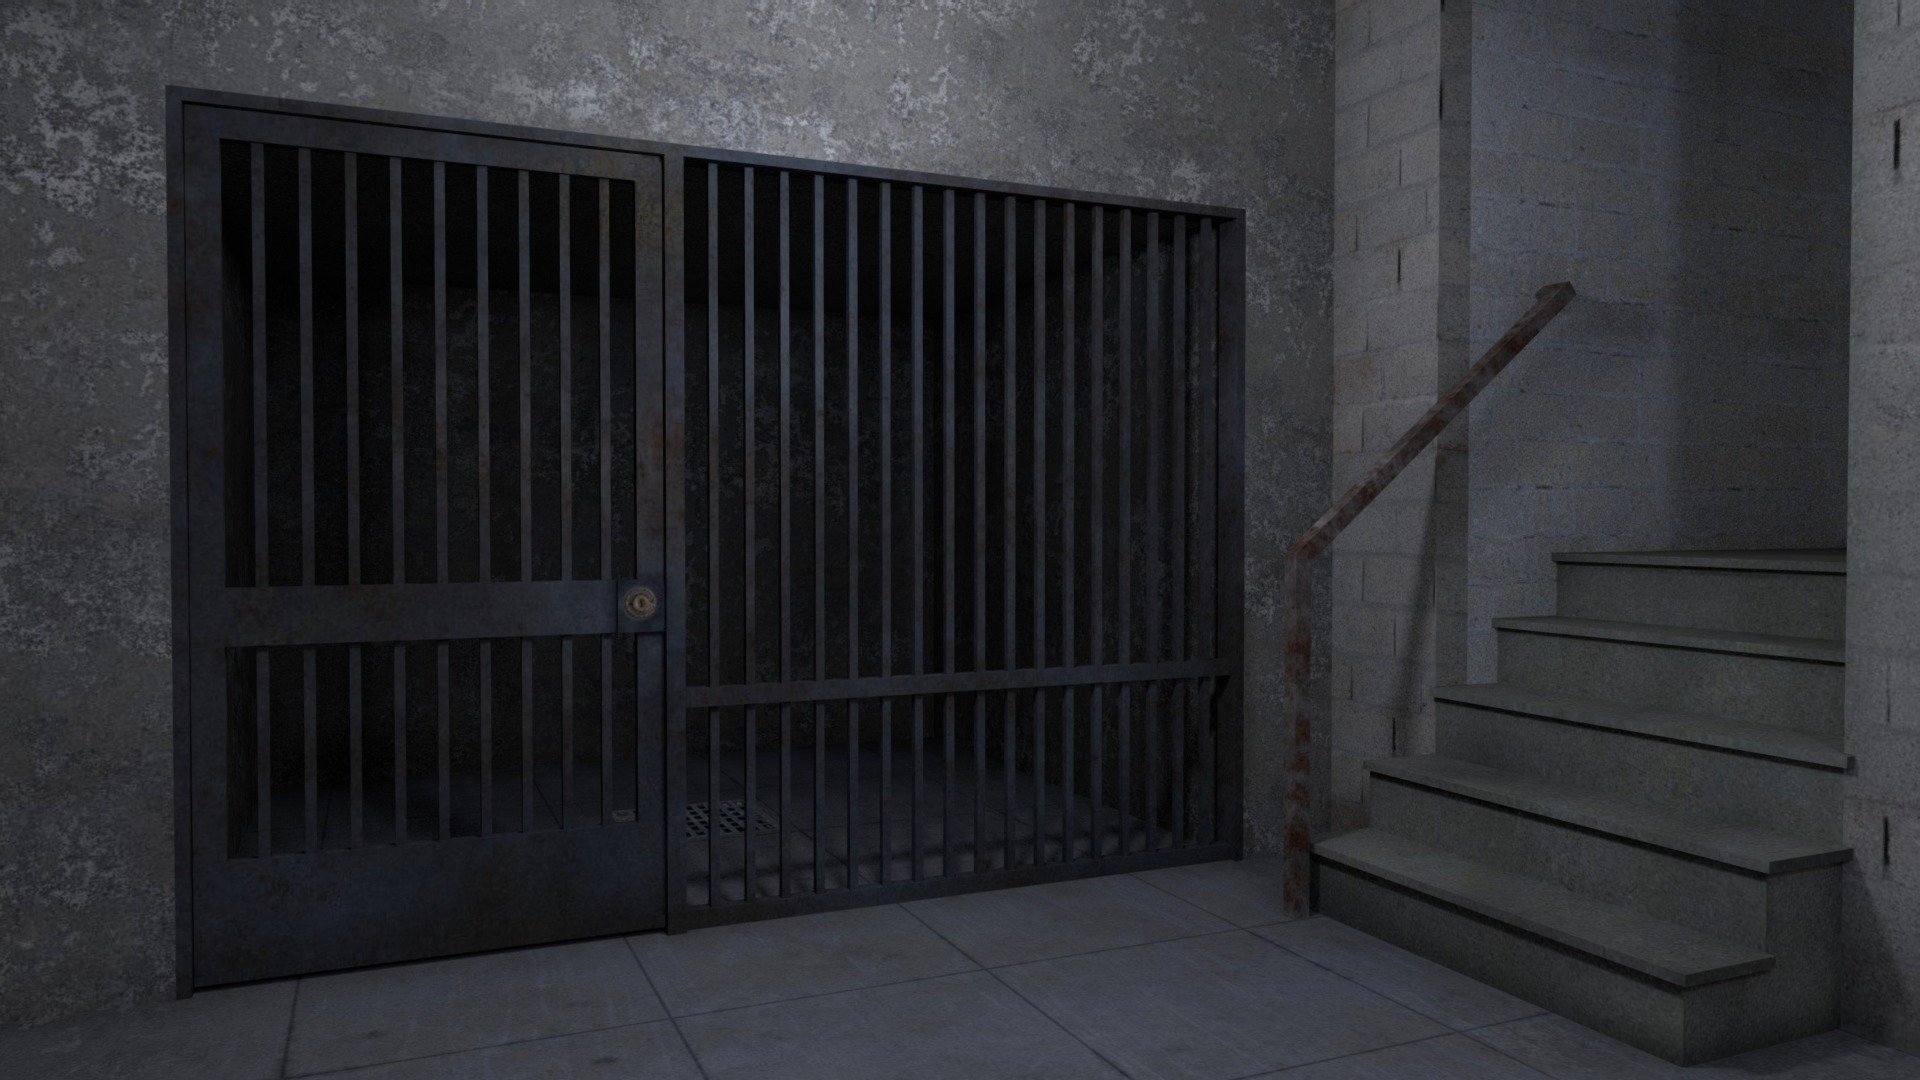 Prison Jail Cell
interior prison scene - Prison Jail Cell - Buy Royalty Free 3D model by jimbogies 3d model